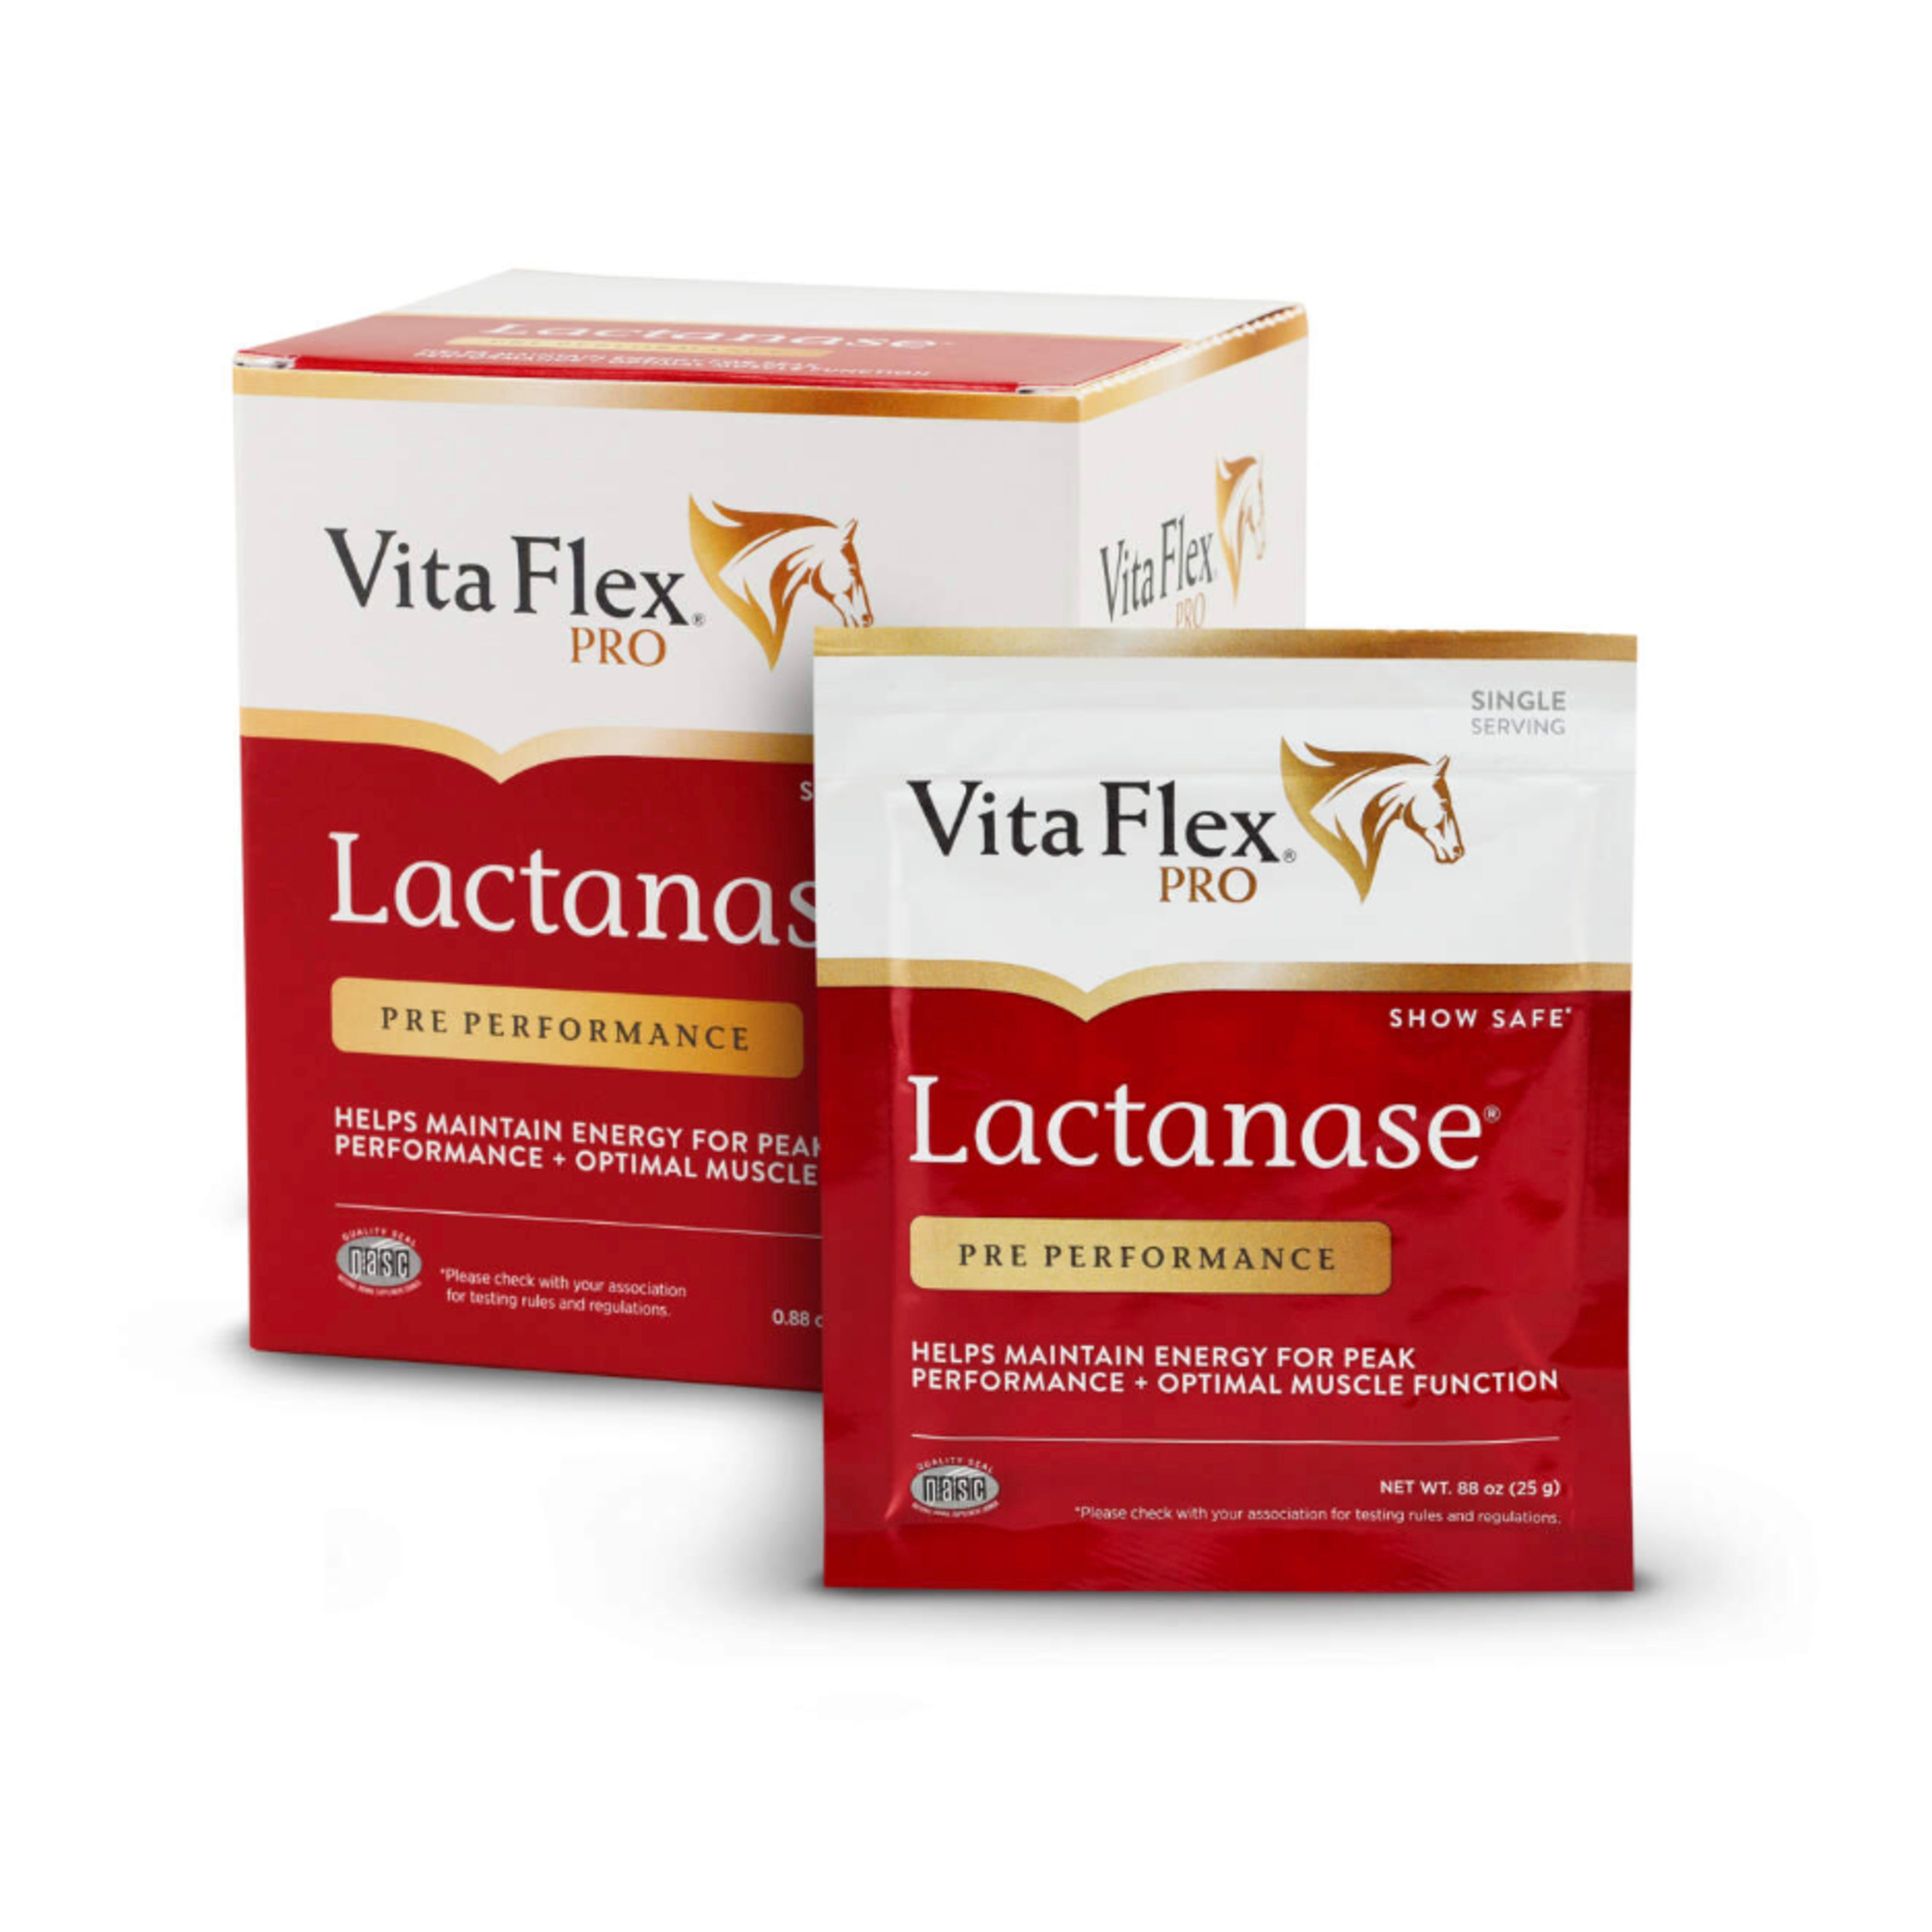 Vita Flex Pro Lactanase